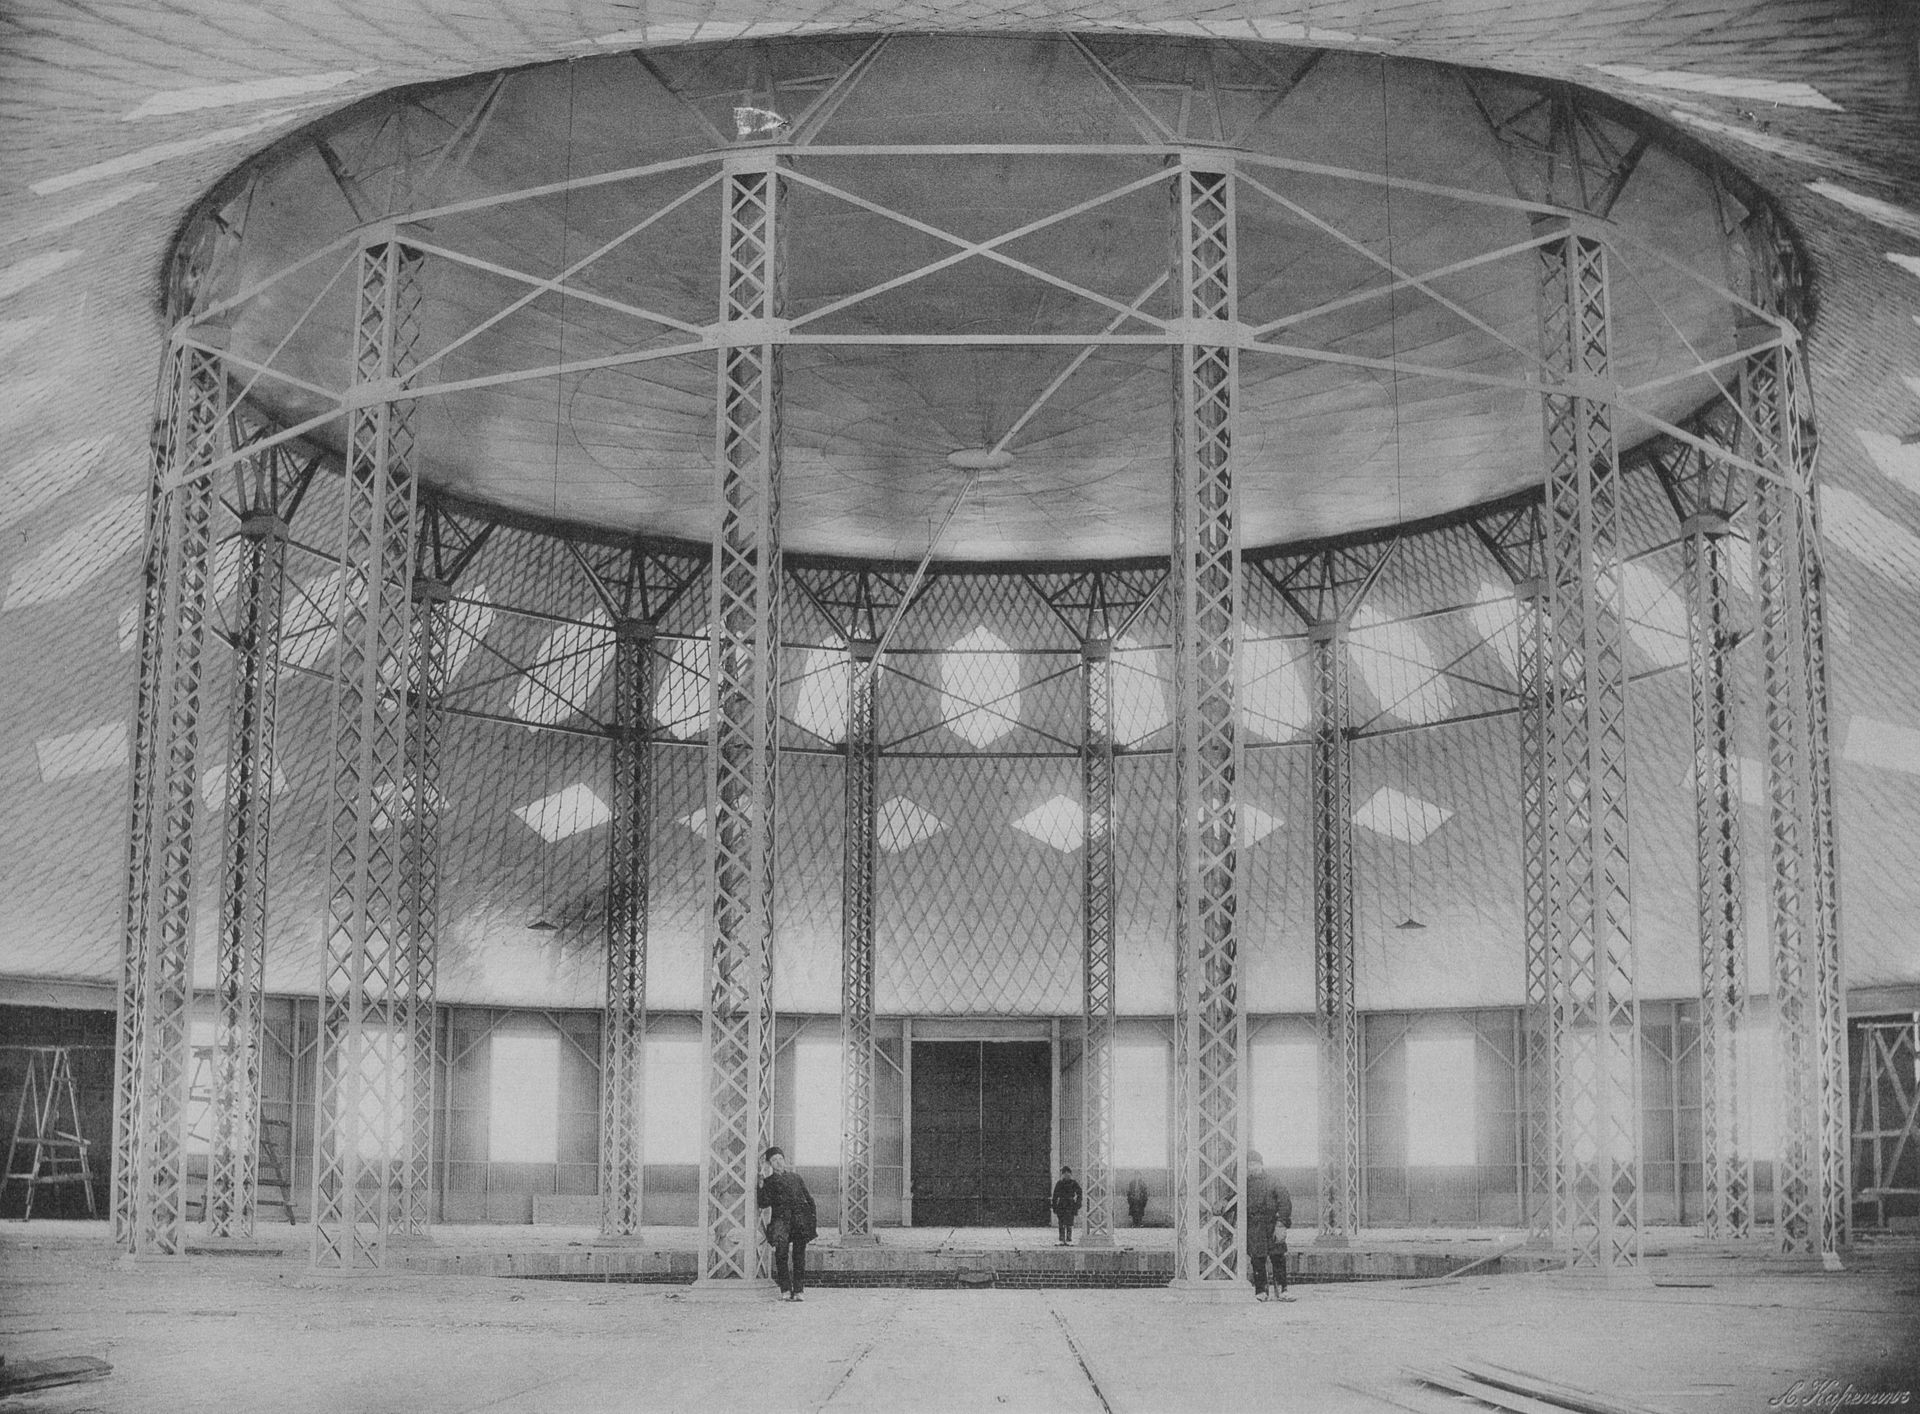 Membrane roof and tensile lattice shell of the Shukhov Rotunda, Russia, 1895.